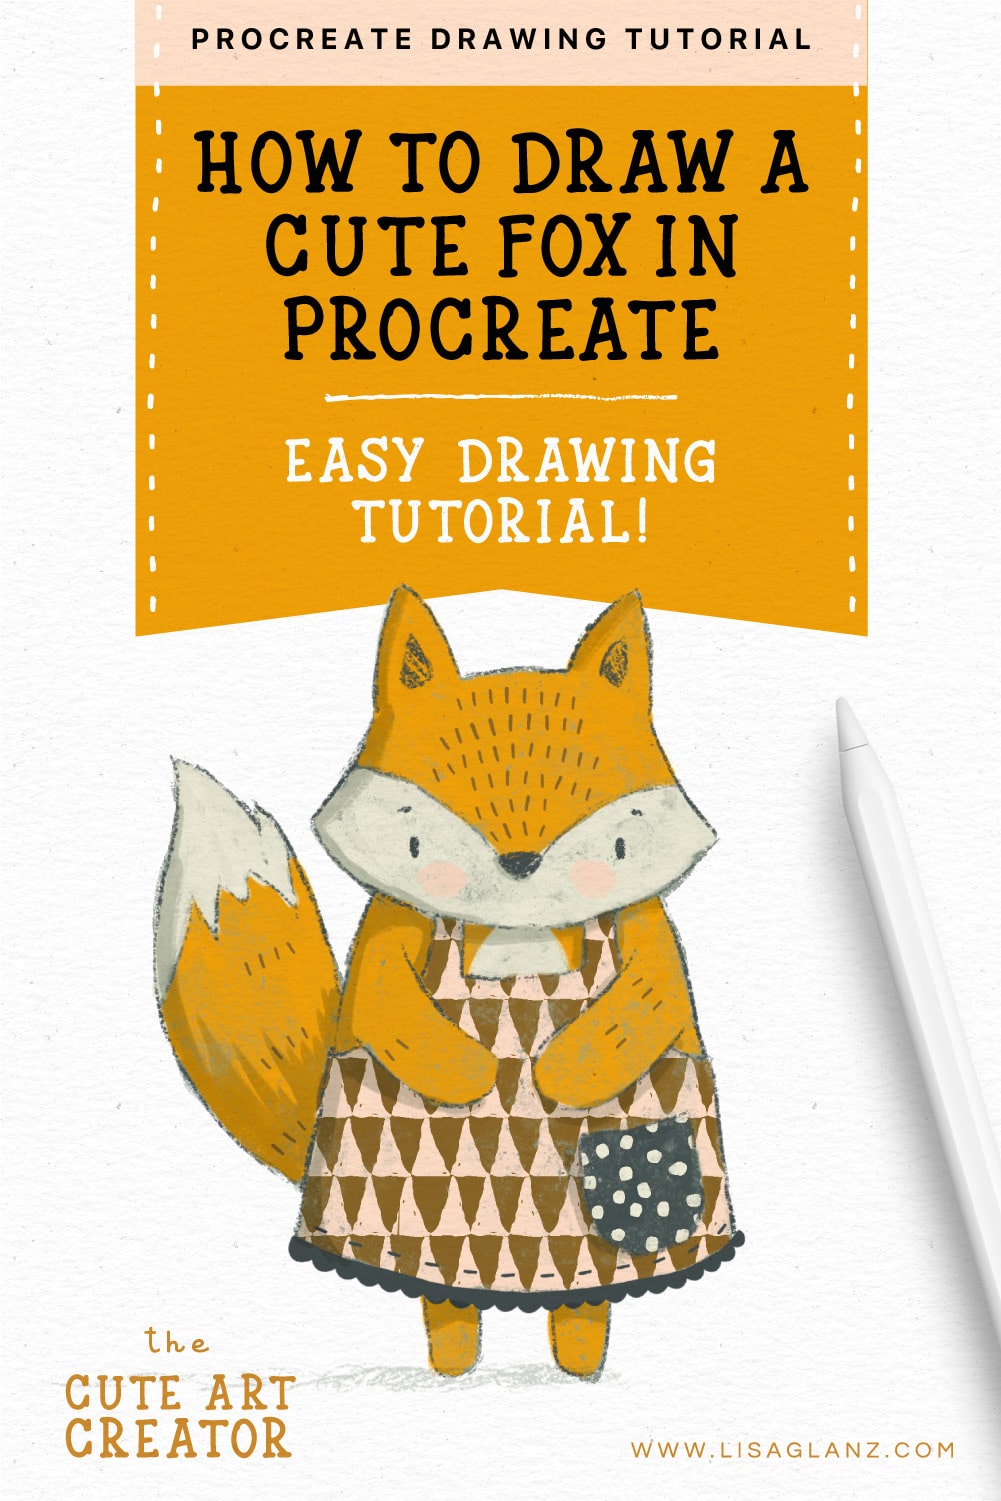 how to draw a cute fox in Procreate tutorial